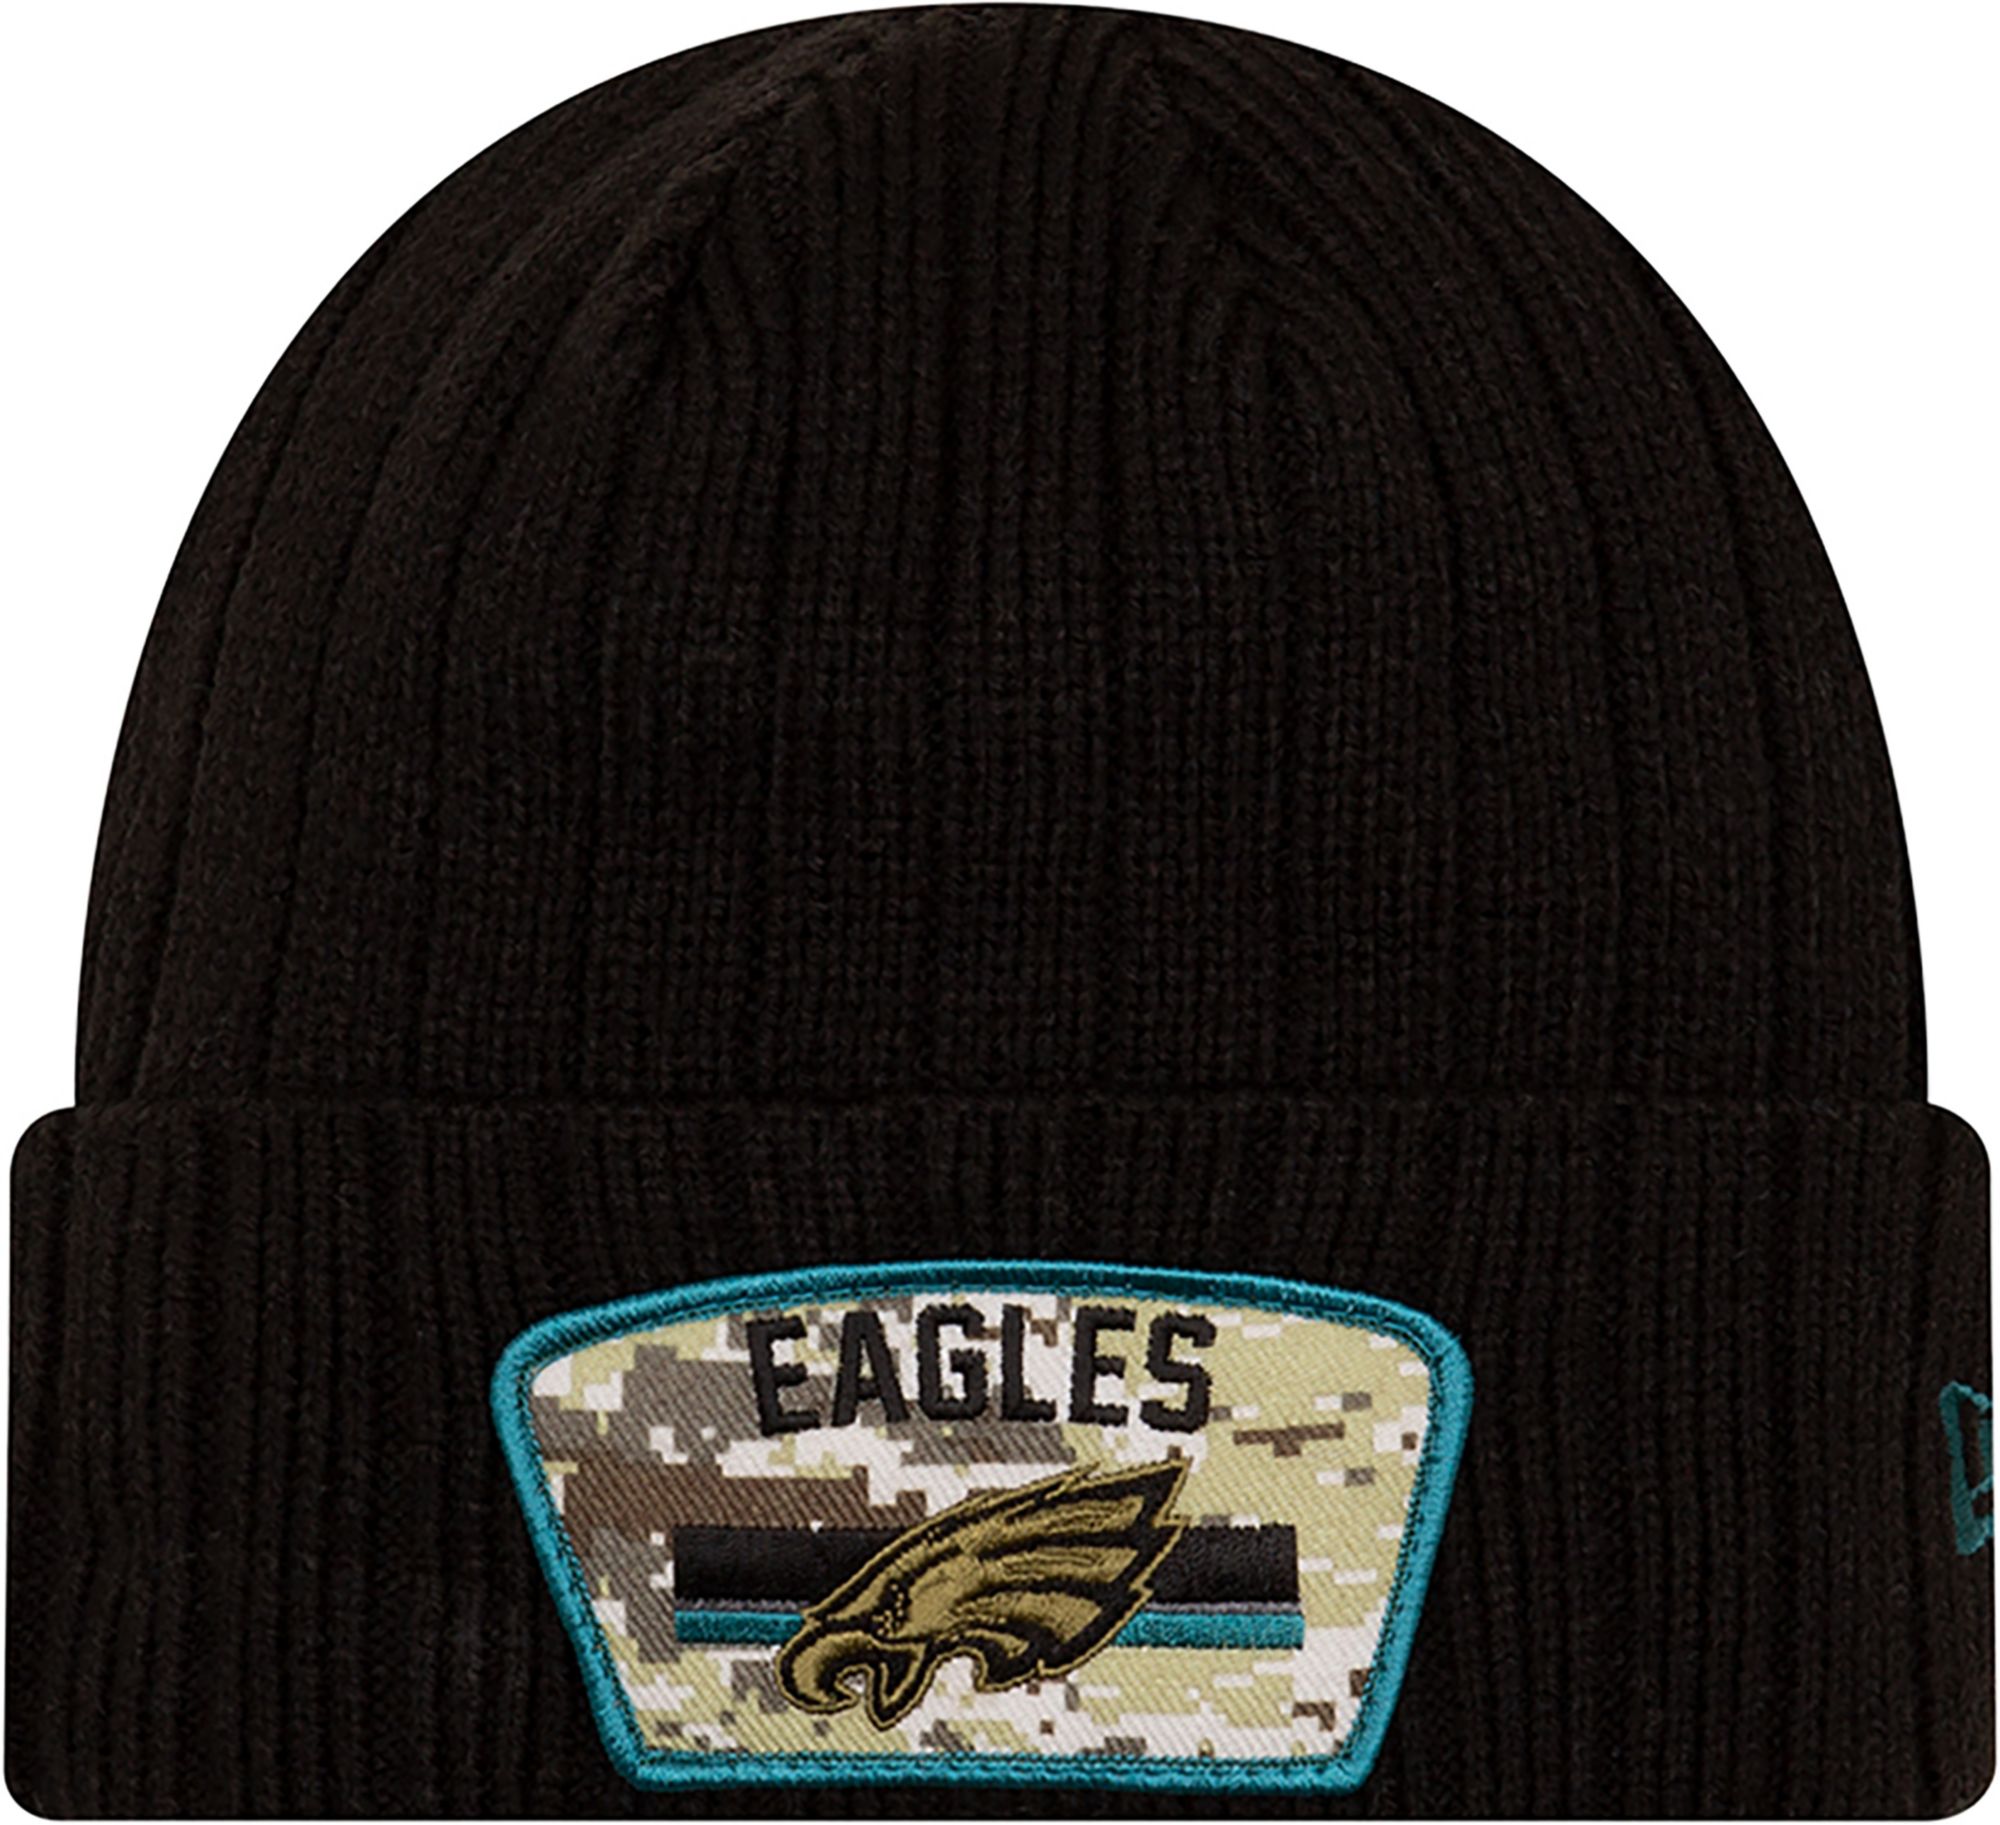 New Era / Men's Philadelphia Eagles Salute to Service Black Knit